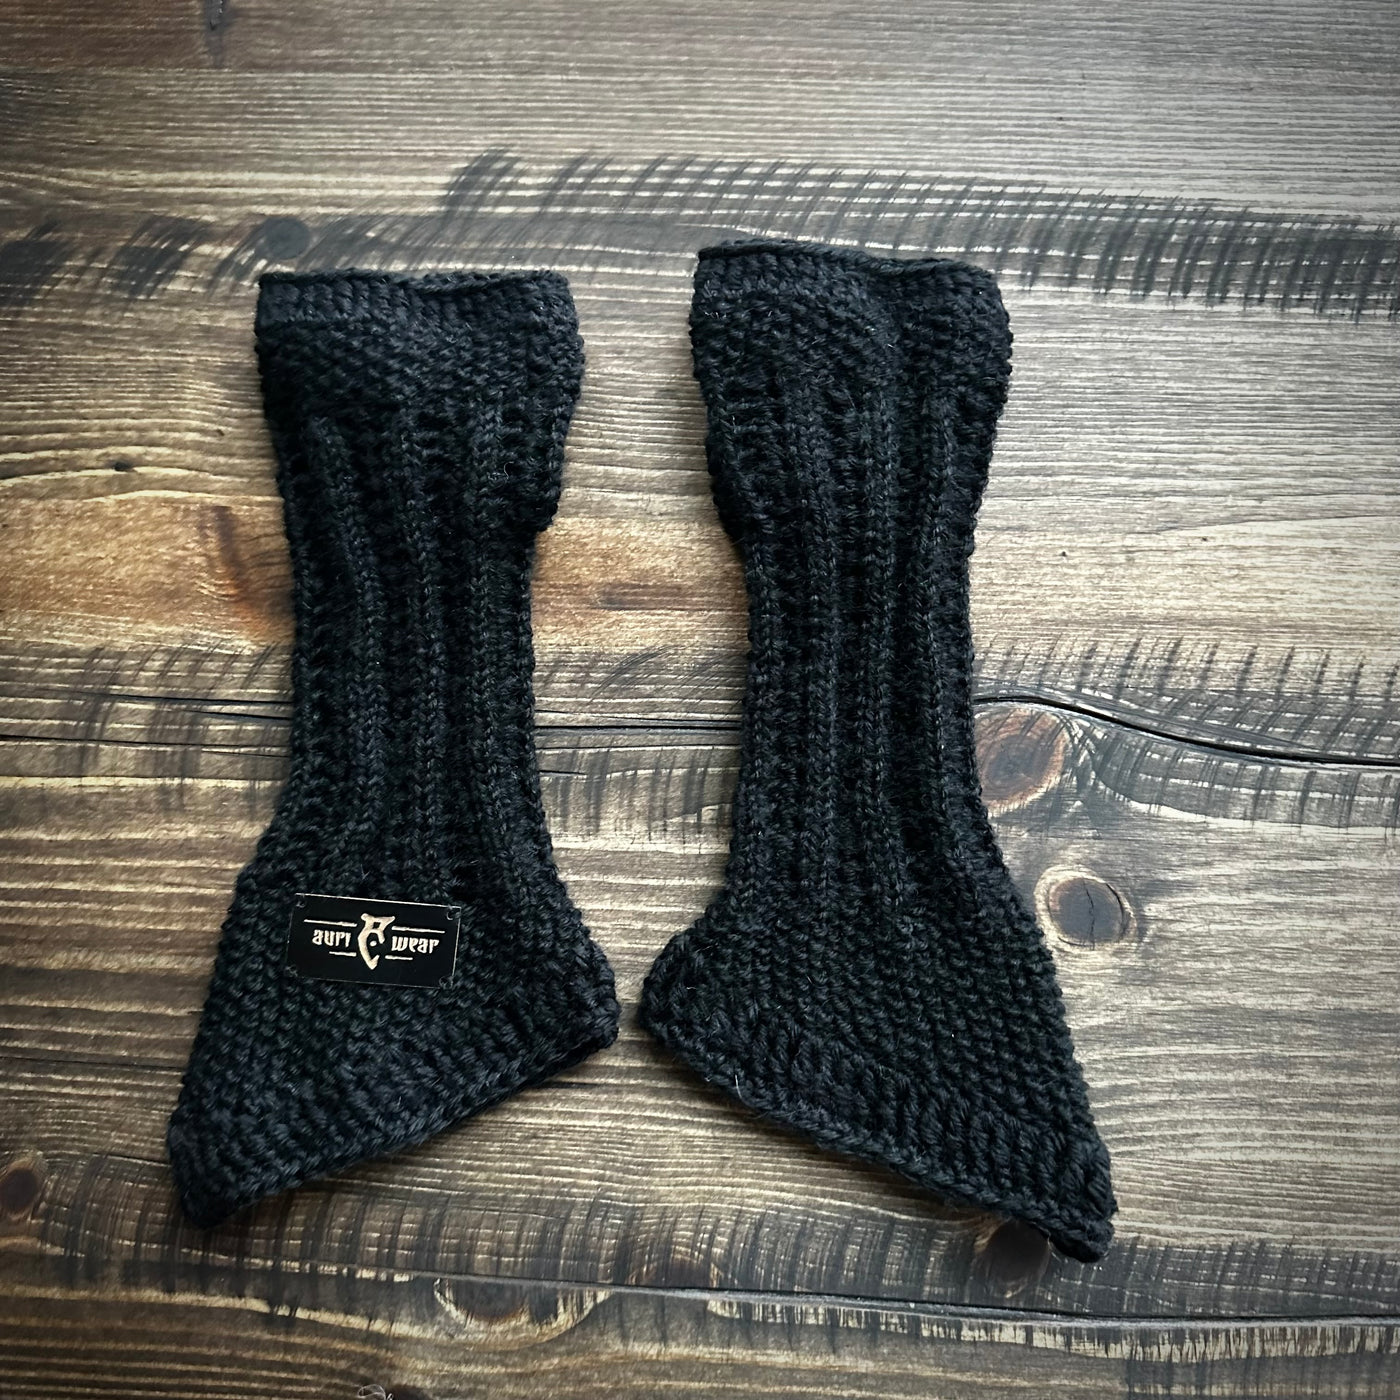 Handmade knitted pitch black wrist warmers